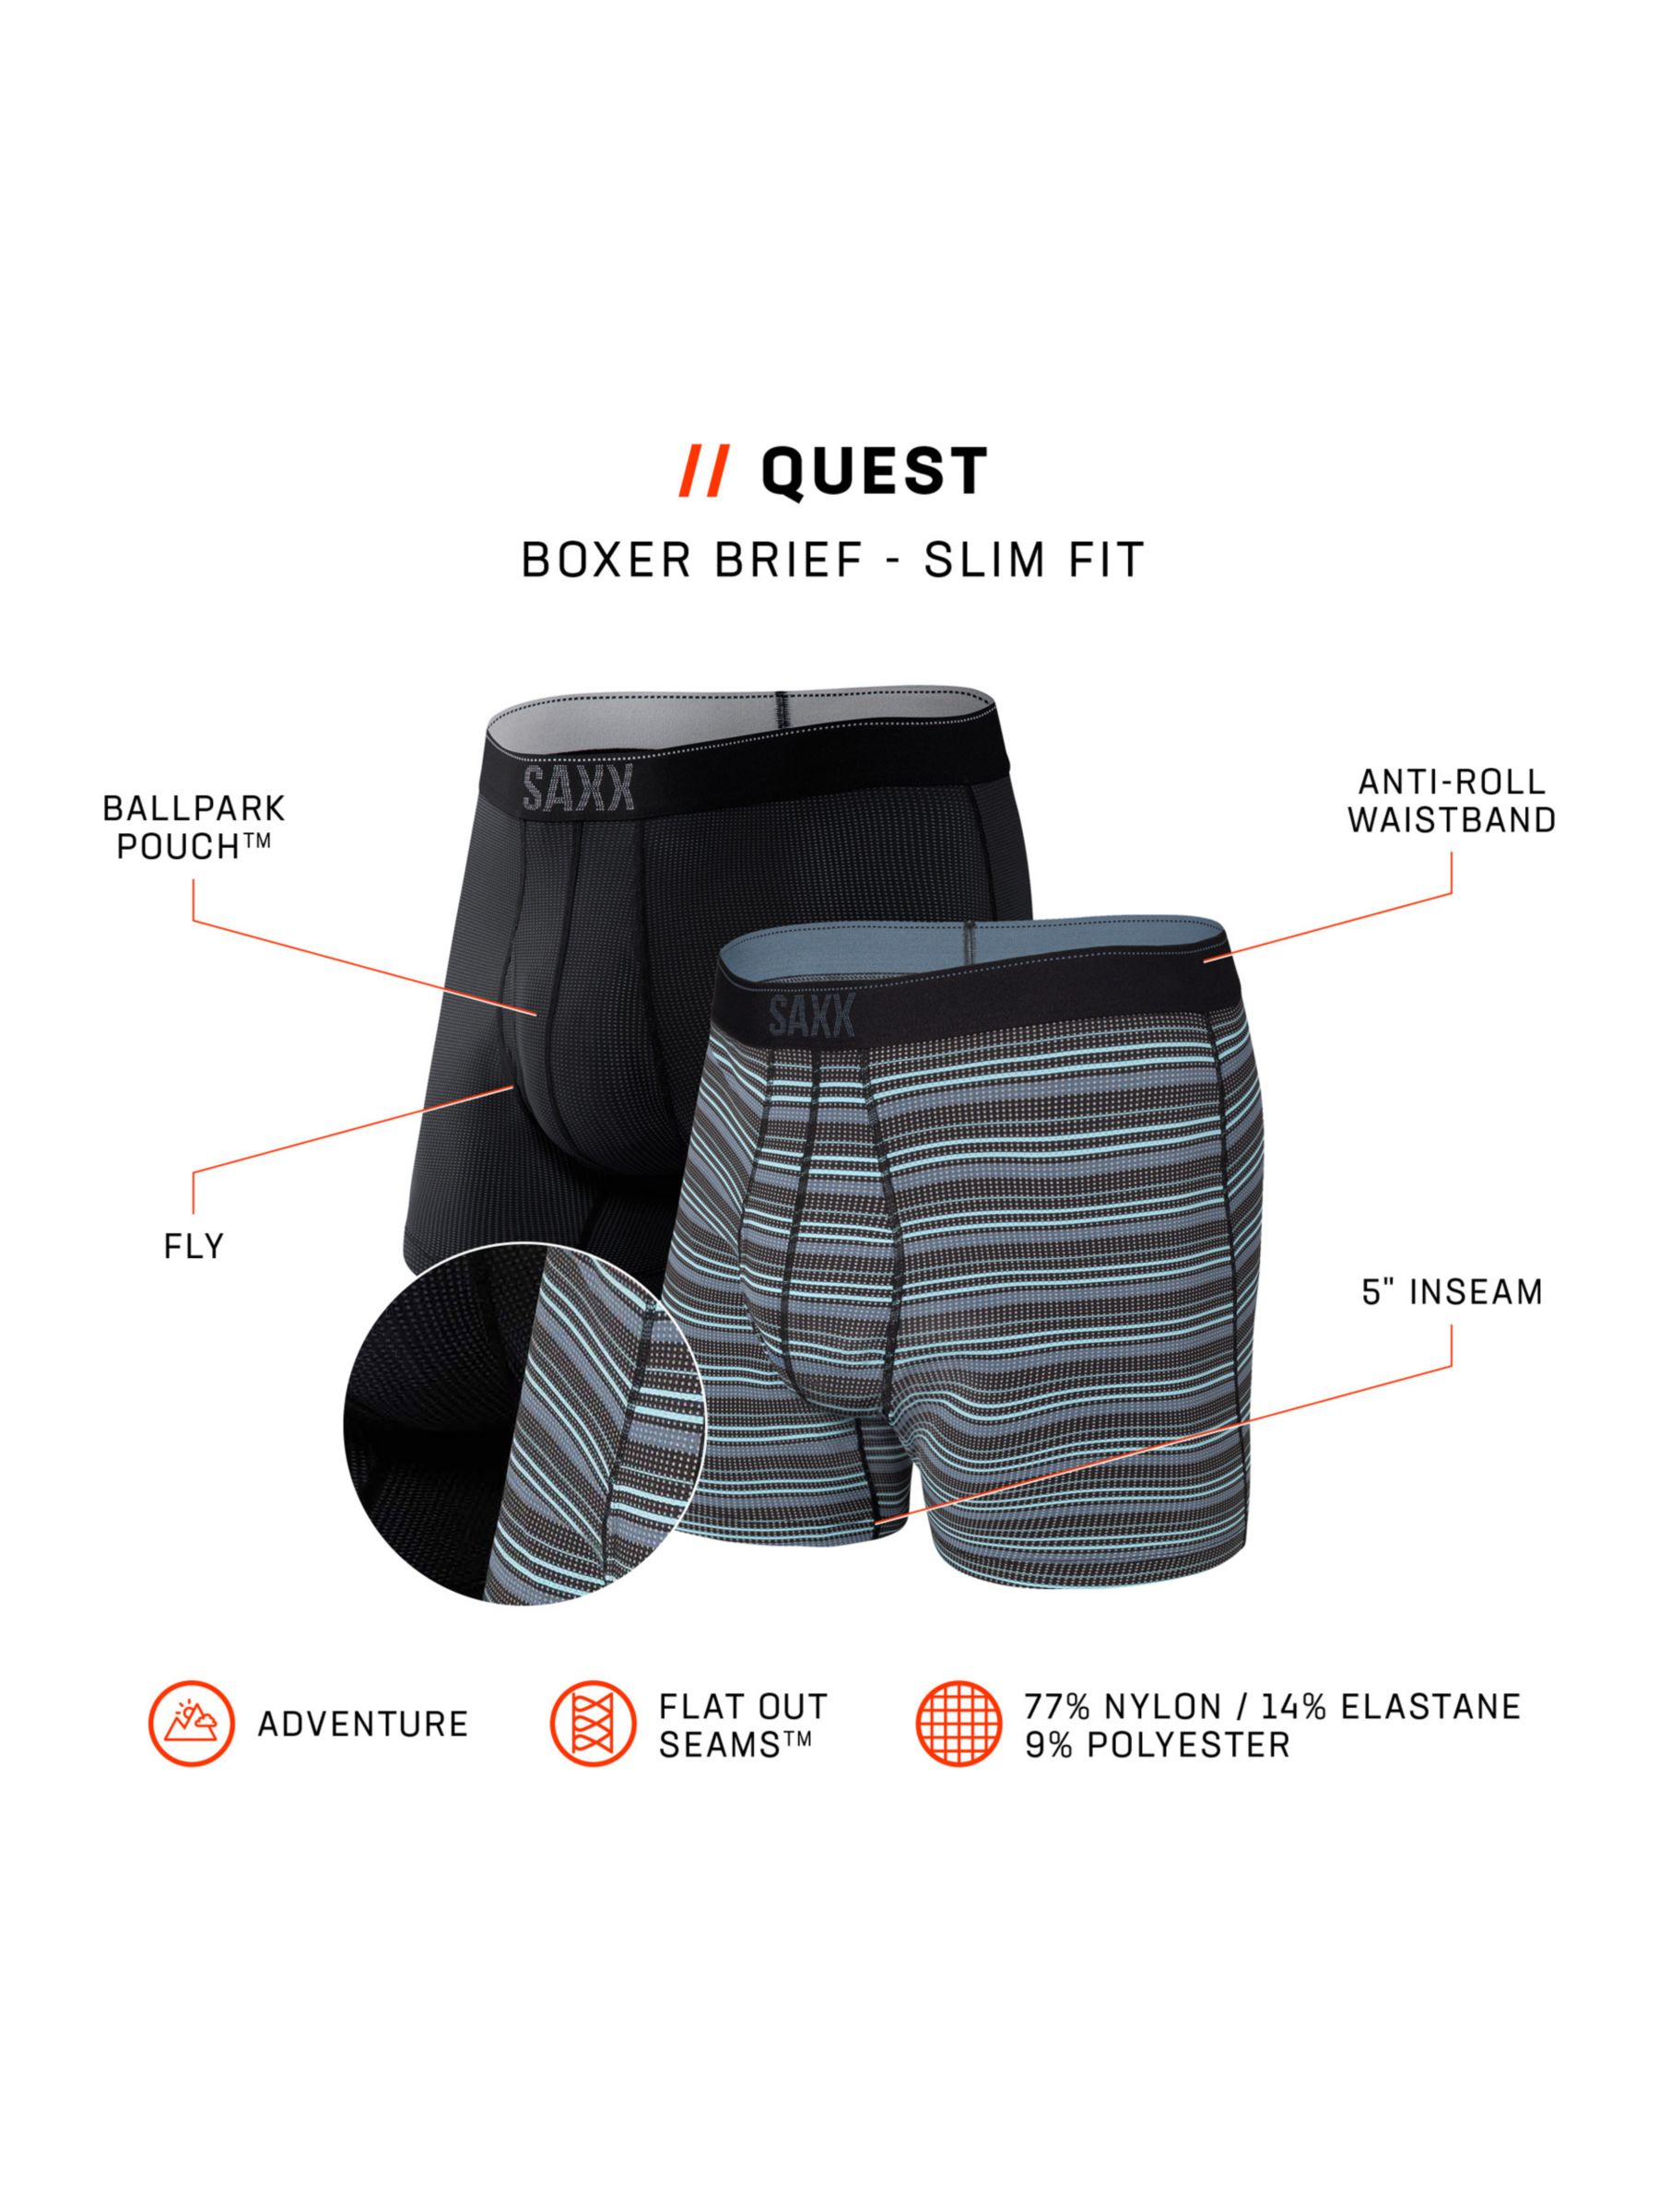 Saxx Quest 2.0 Boxer Briefs - Men's 5 Inseam - Package of 2